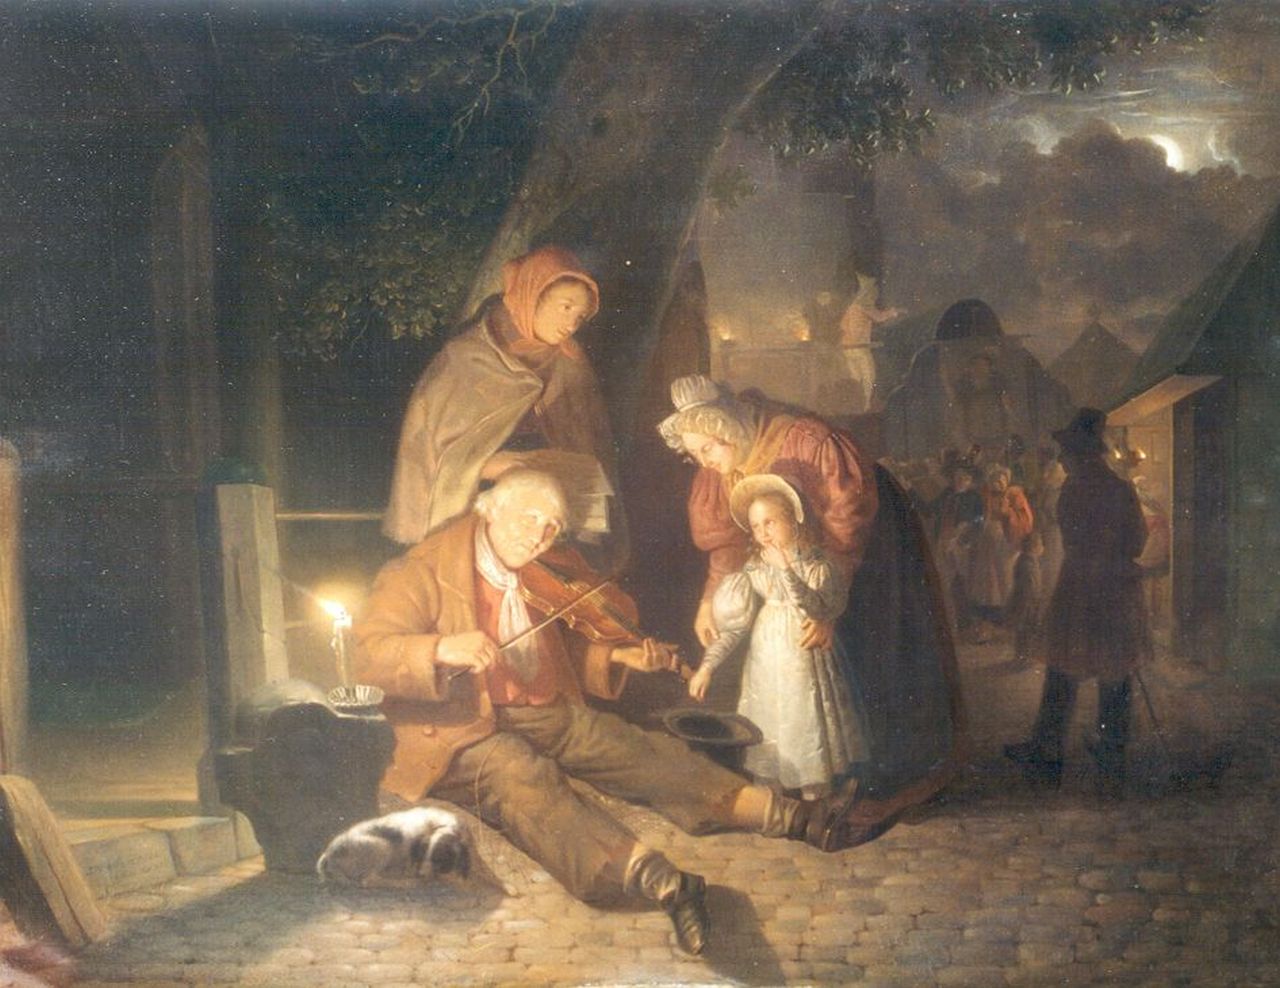 Grootvelt J.H. van | Jan Hendrik van Grootvelt, De oude straatmuzikant, olieverf op paneel 44,5 x 57,3 cm, gesigneerd linksonder en gedateerd 1835